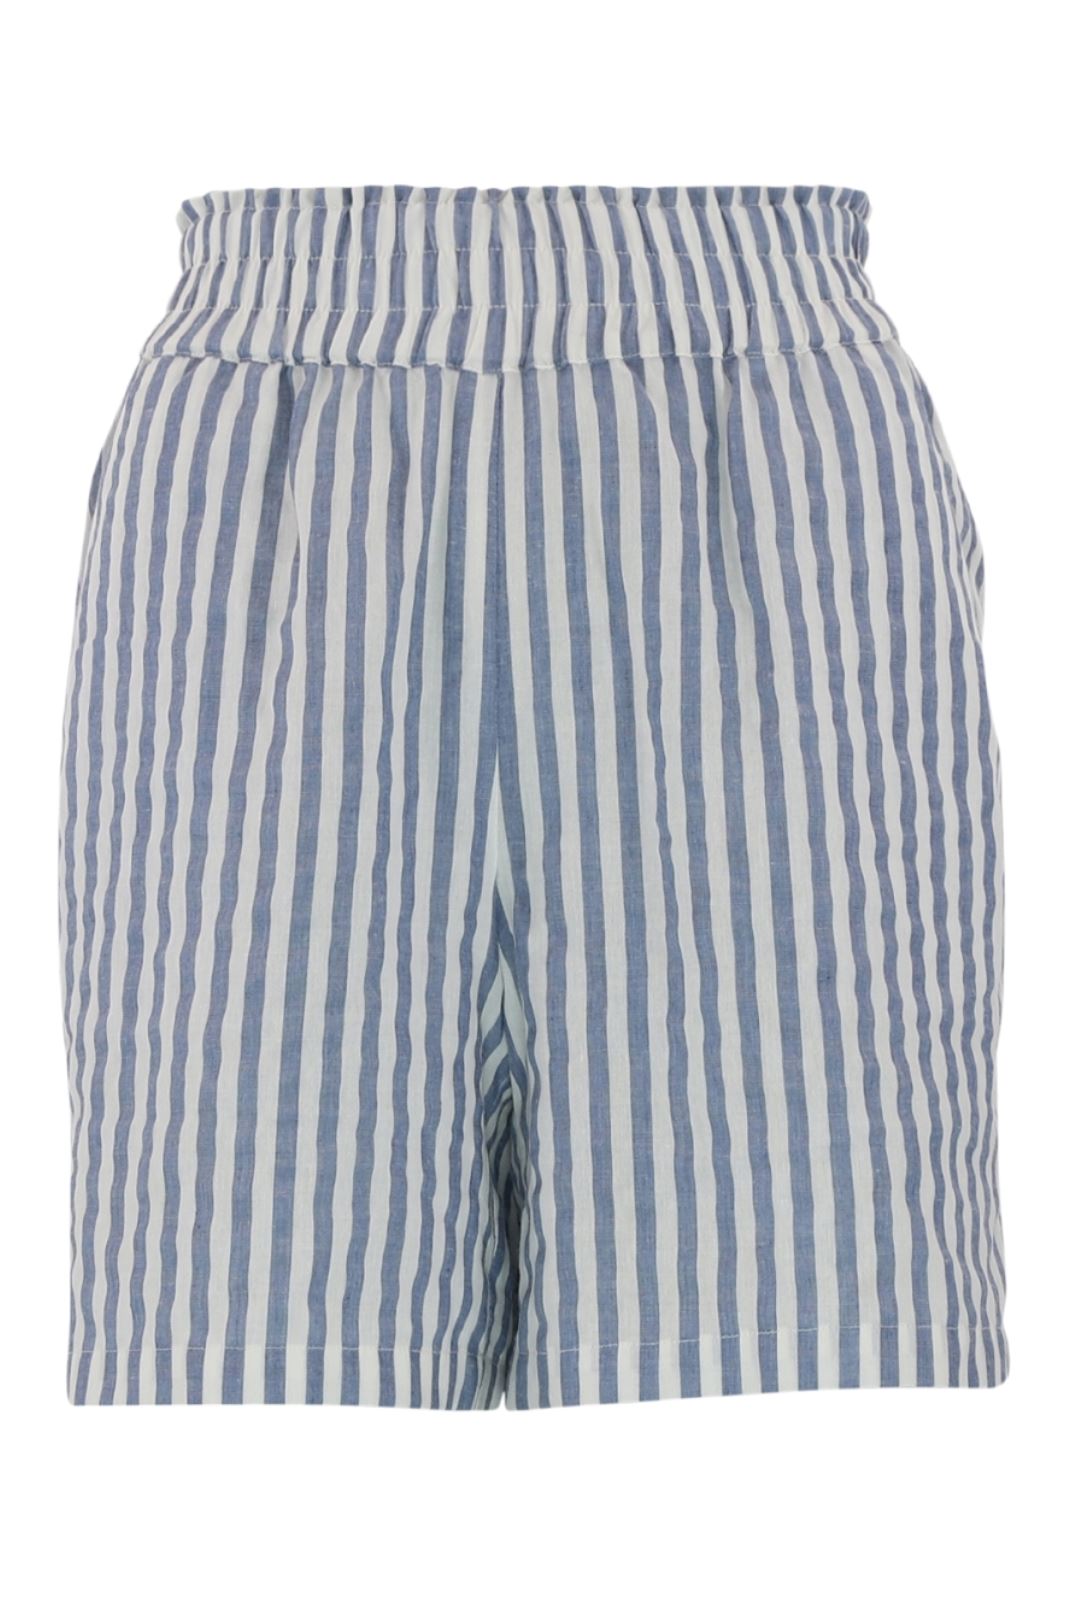 Continue - Evy Stripe Shorts - 416 Blue Stripe Shorts 